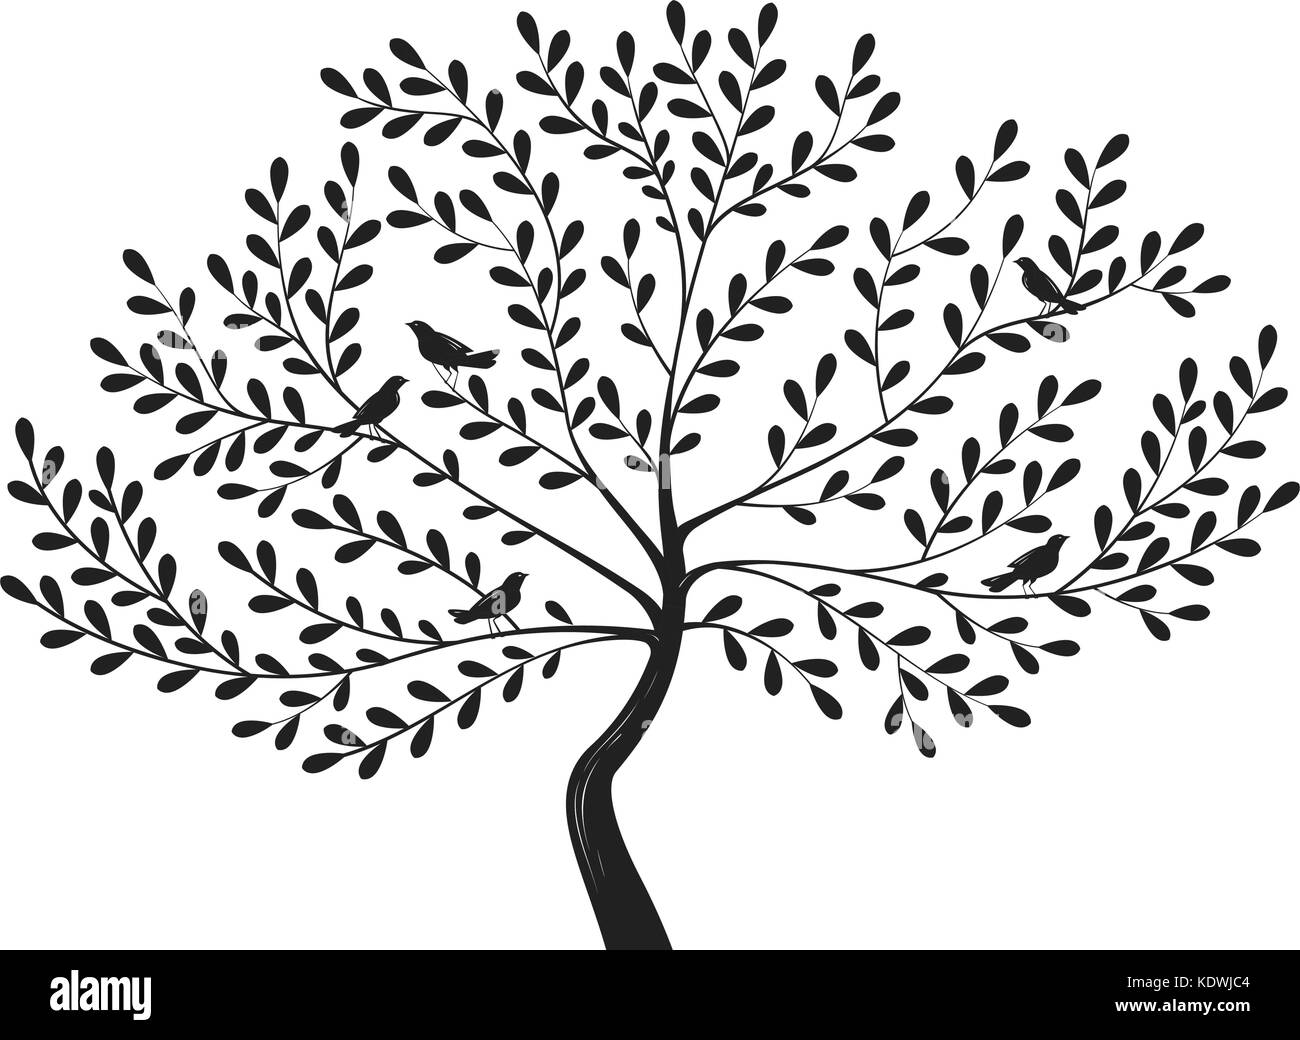 Dekorativer Baum mit Vögeln auf Ästen. Silhouettenvektor-Illustration Stock Vektor